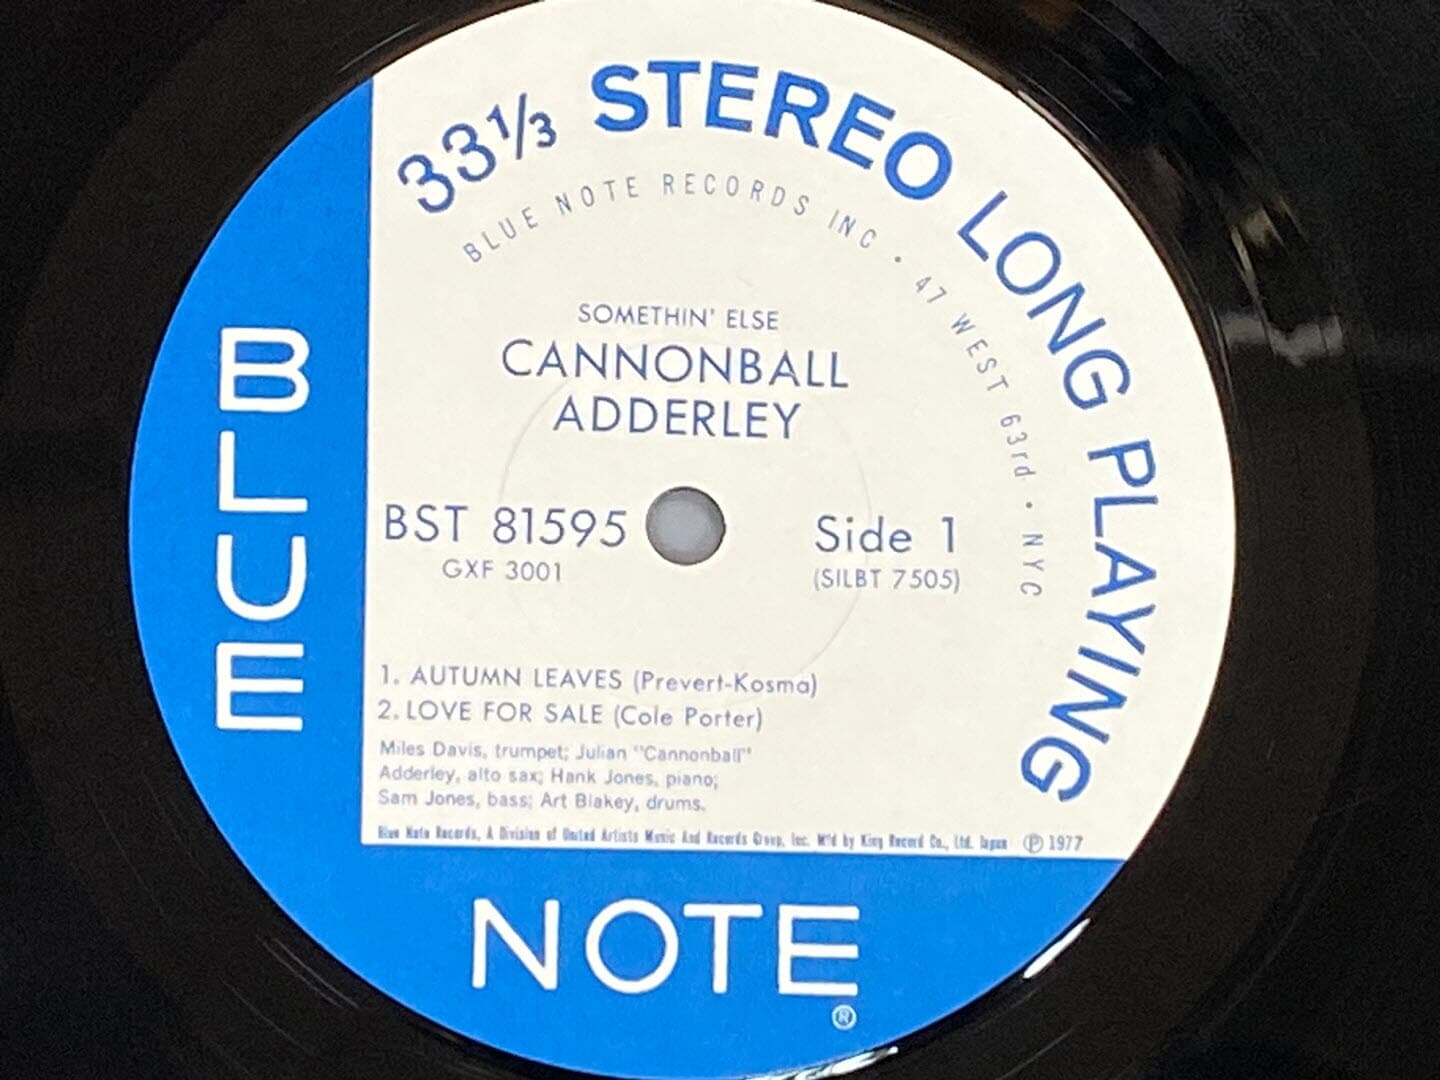 [LP] 캐논볼 애덜리 - Cannonball Adderley - Somethin' Else LP [1977] [일본반]